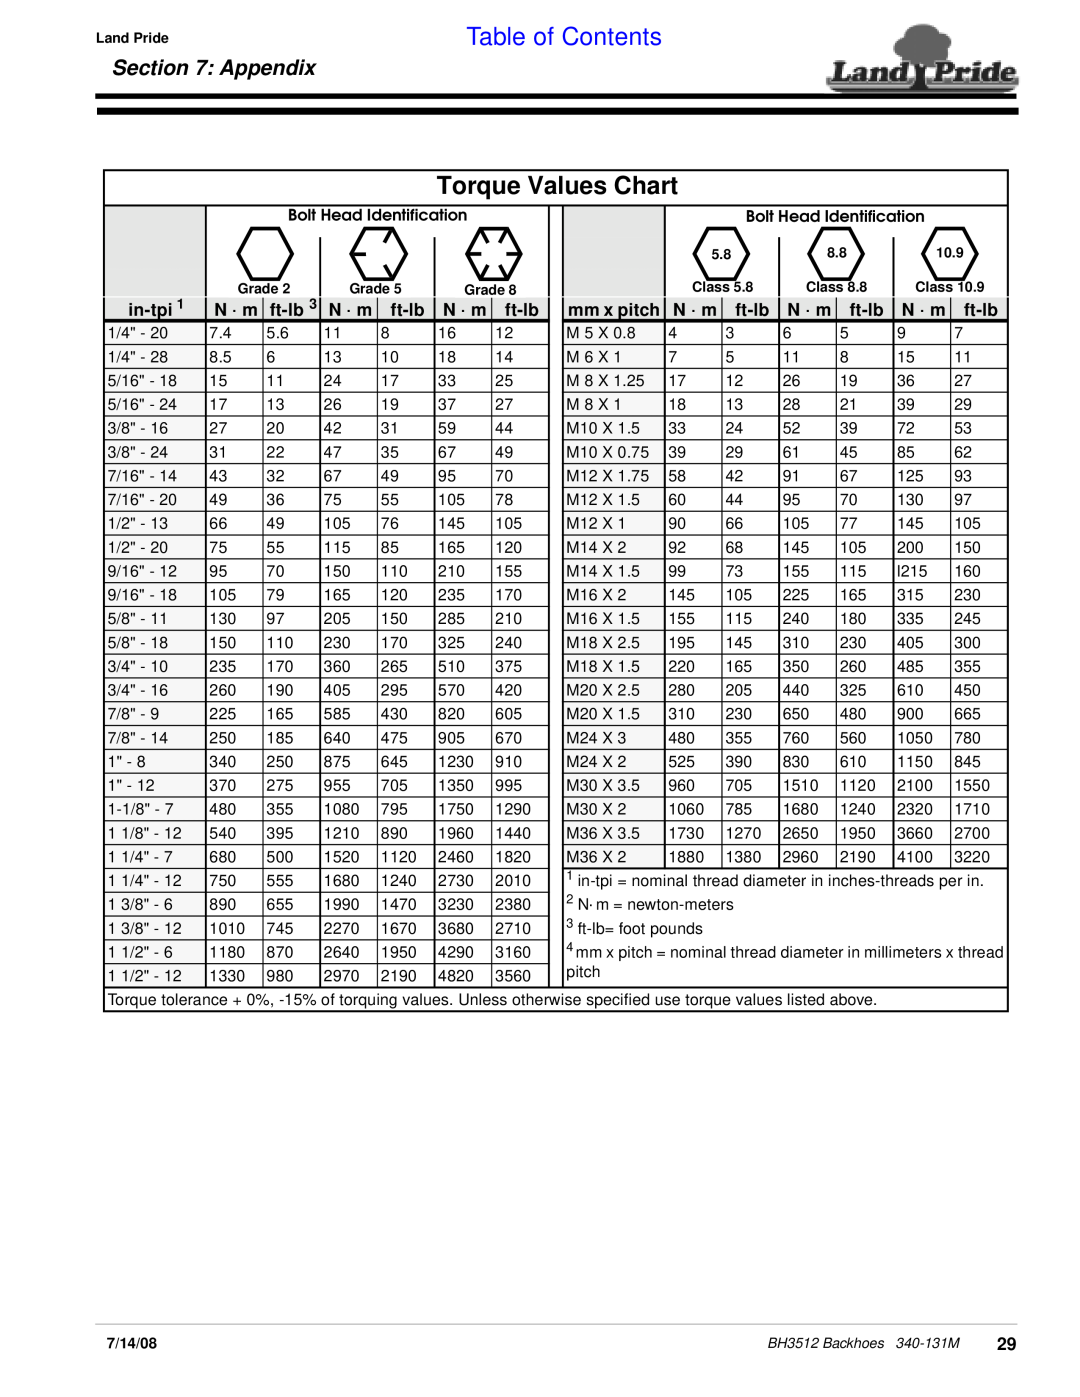 Land Pride BH3512 manual Torque Values Chart, Appendix, Table of Contents 